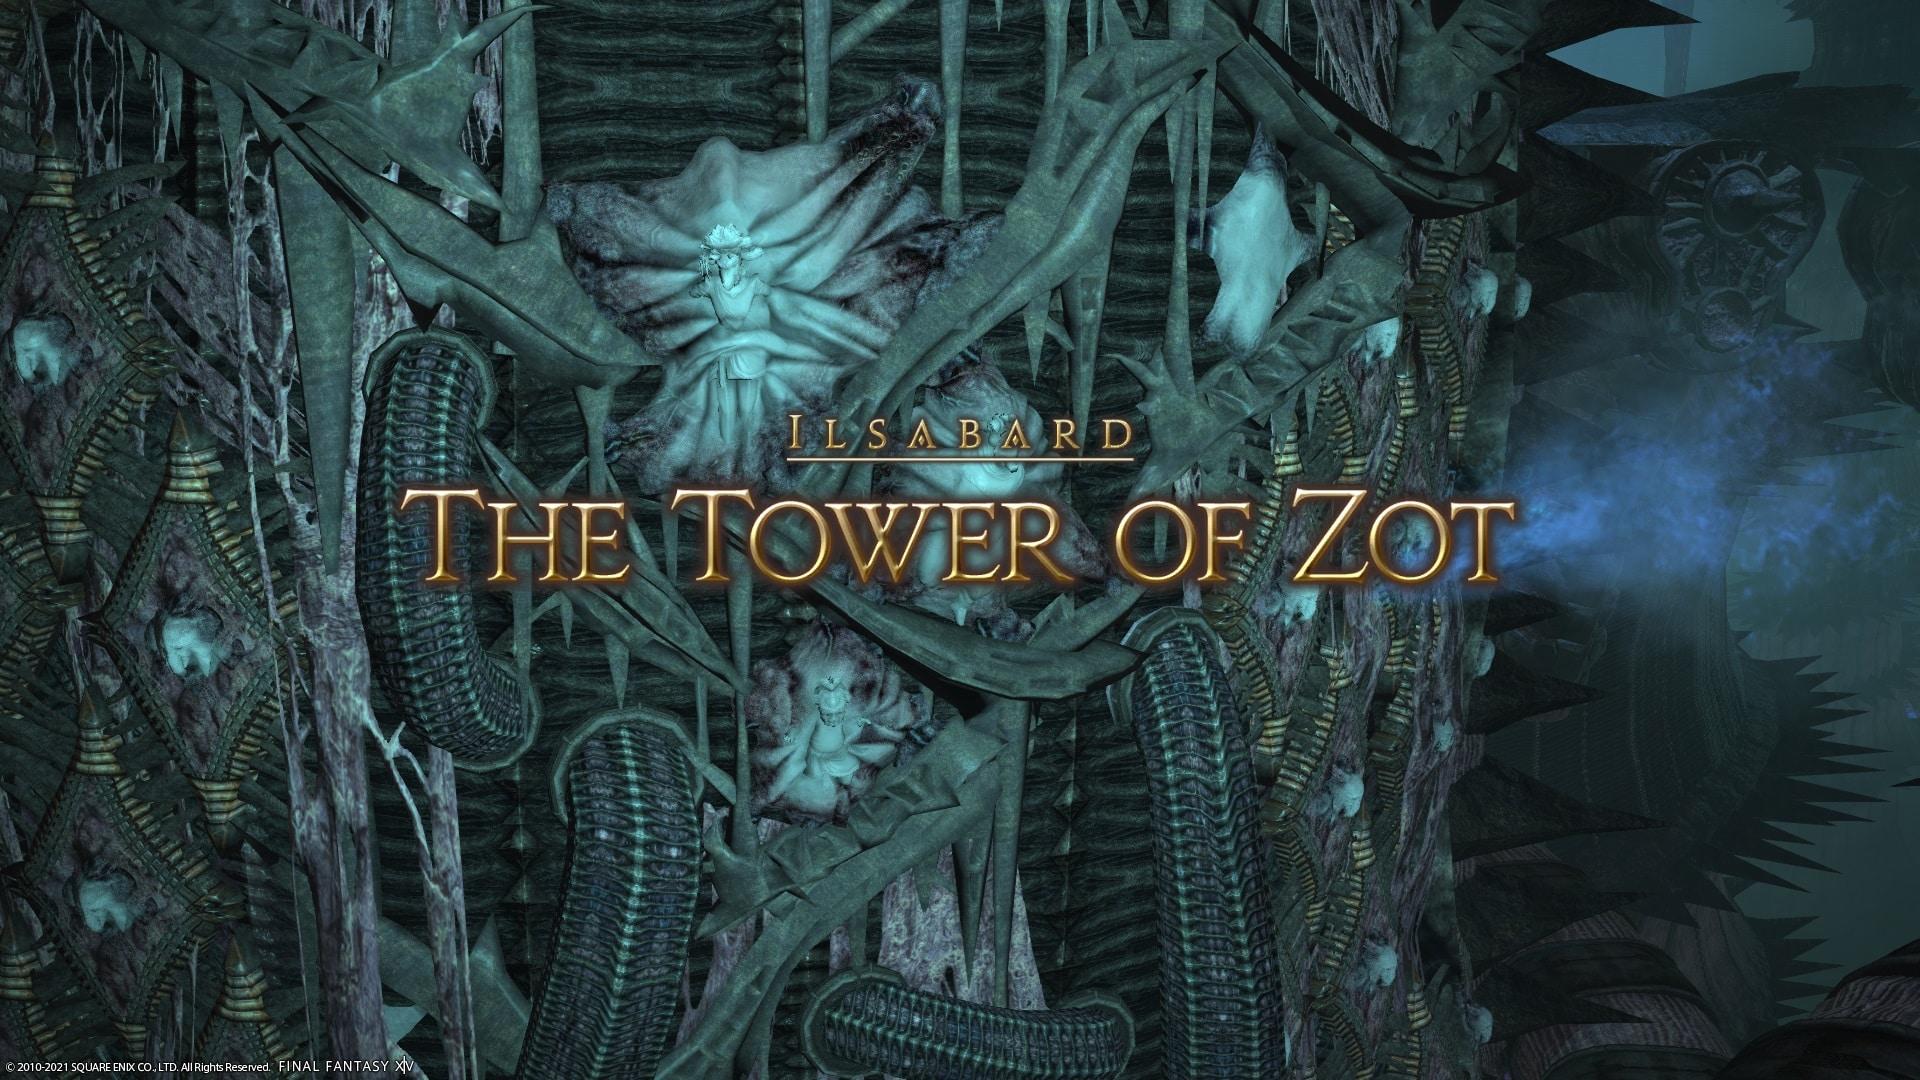 Endwalker logo for Tower of Zot dungeon